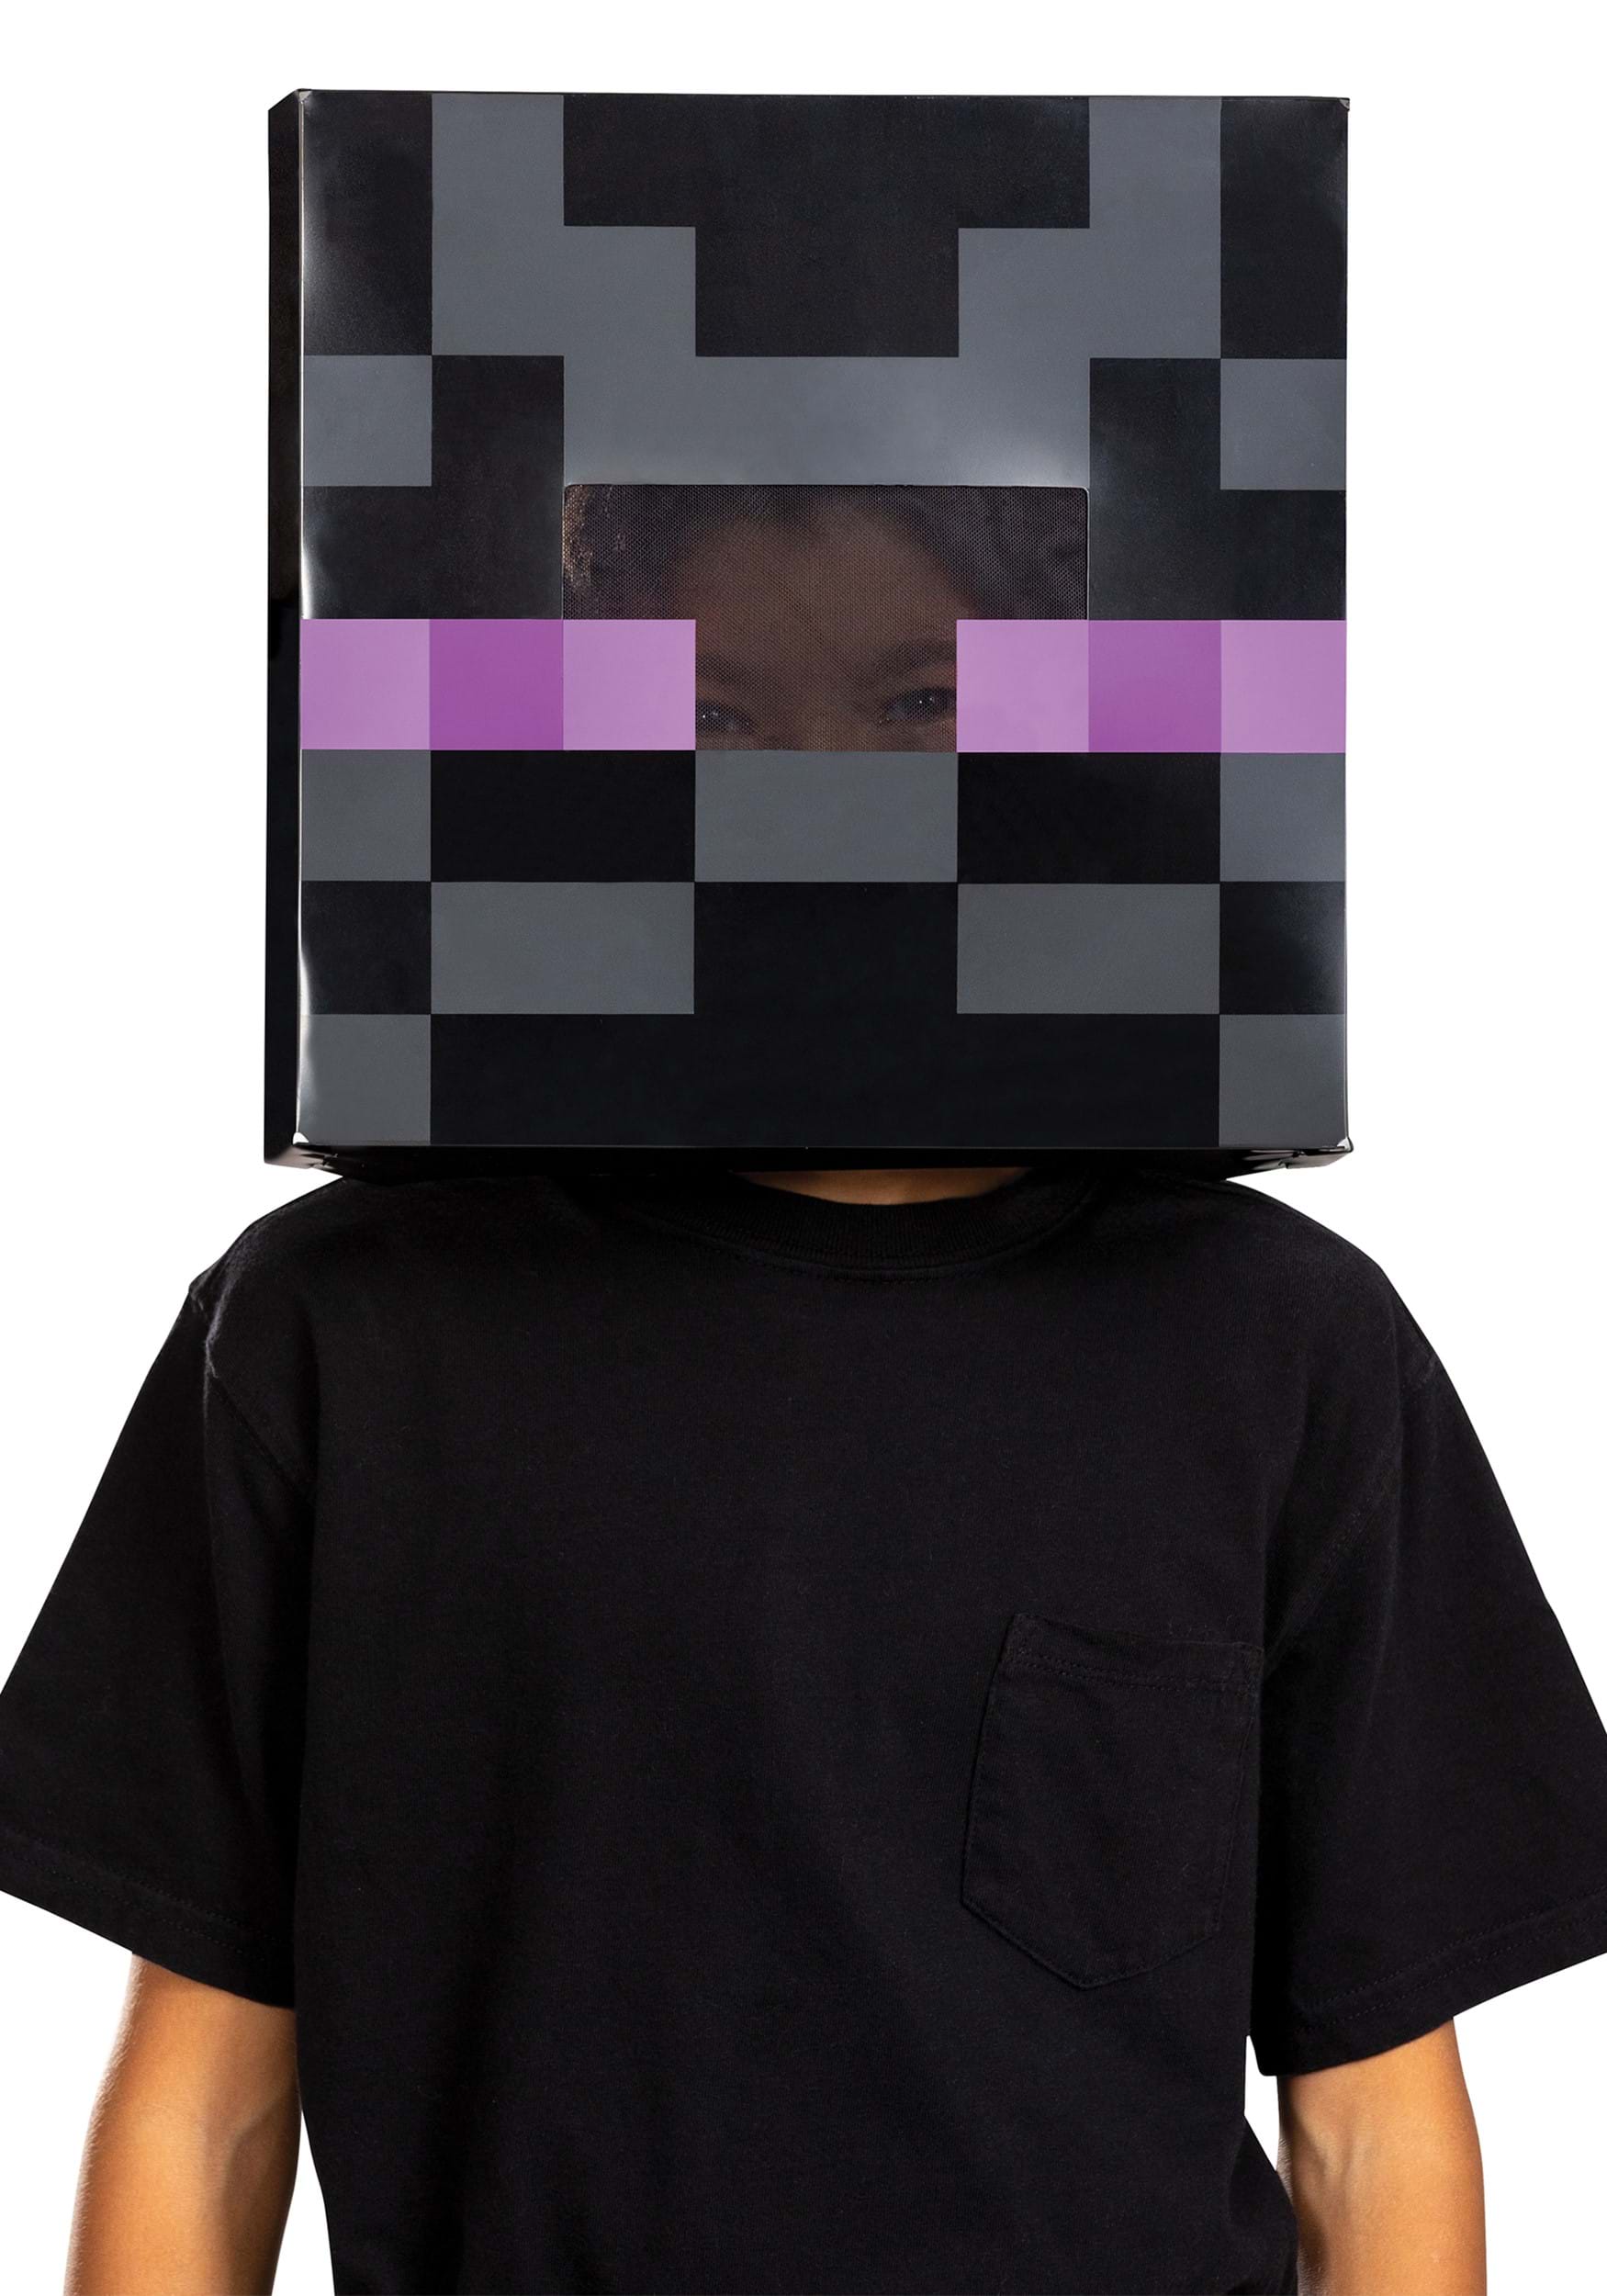 Minecraft Child's Inflatable Enderman Costume